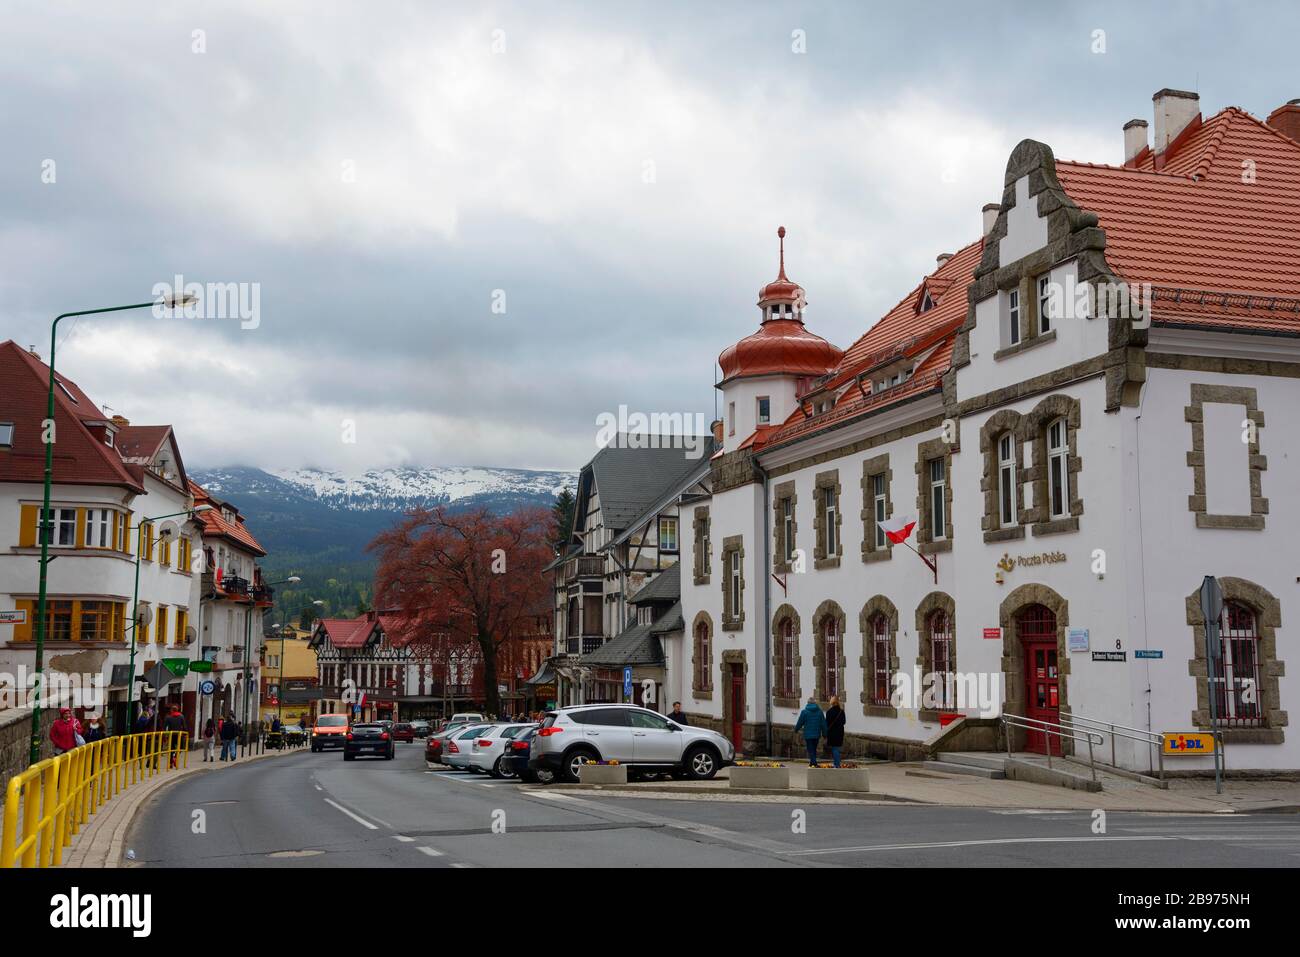 Post office building on the right and centre, Szklarska Poreba, Lower Silesia, Krkonose Mountains, Poland Stock Photo